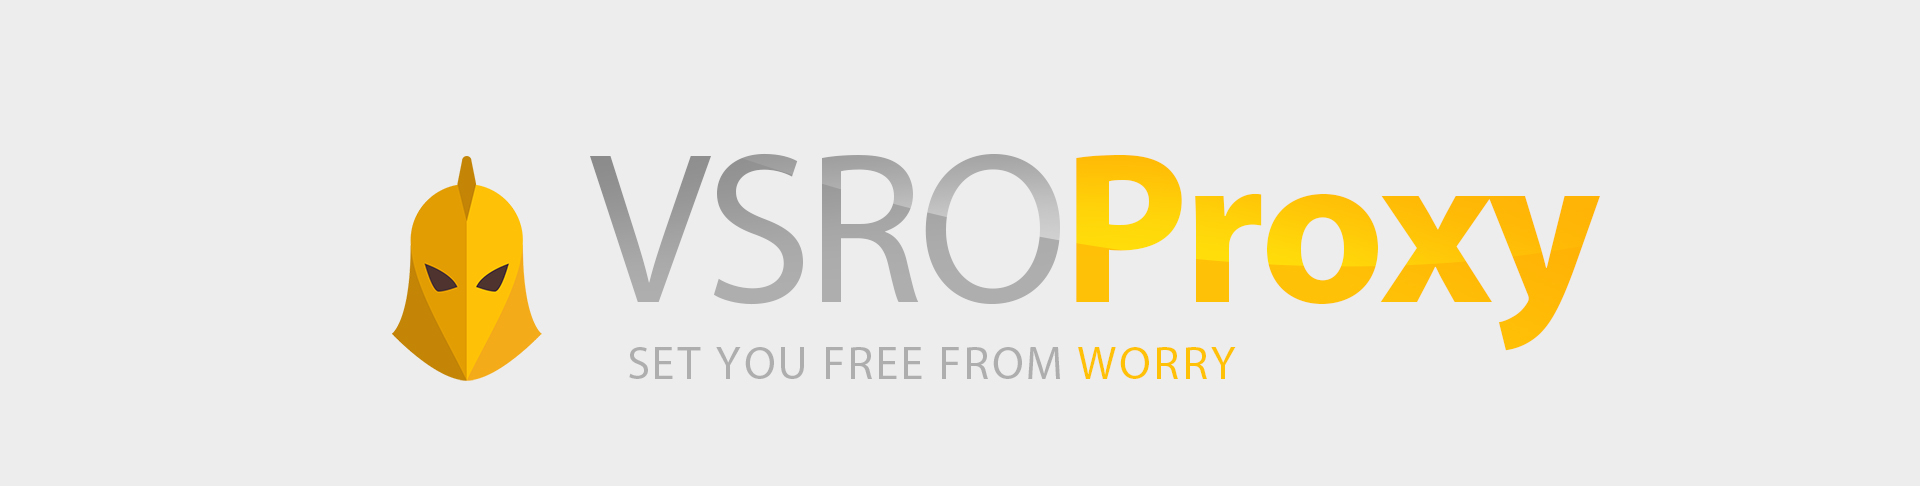 vsroproxy-logo-gray-cropped3.jpg